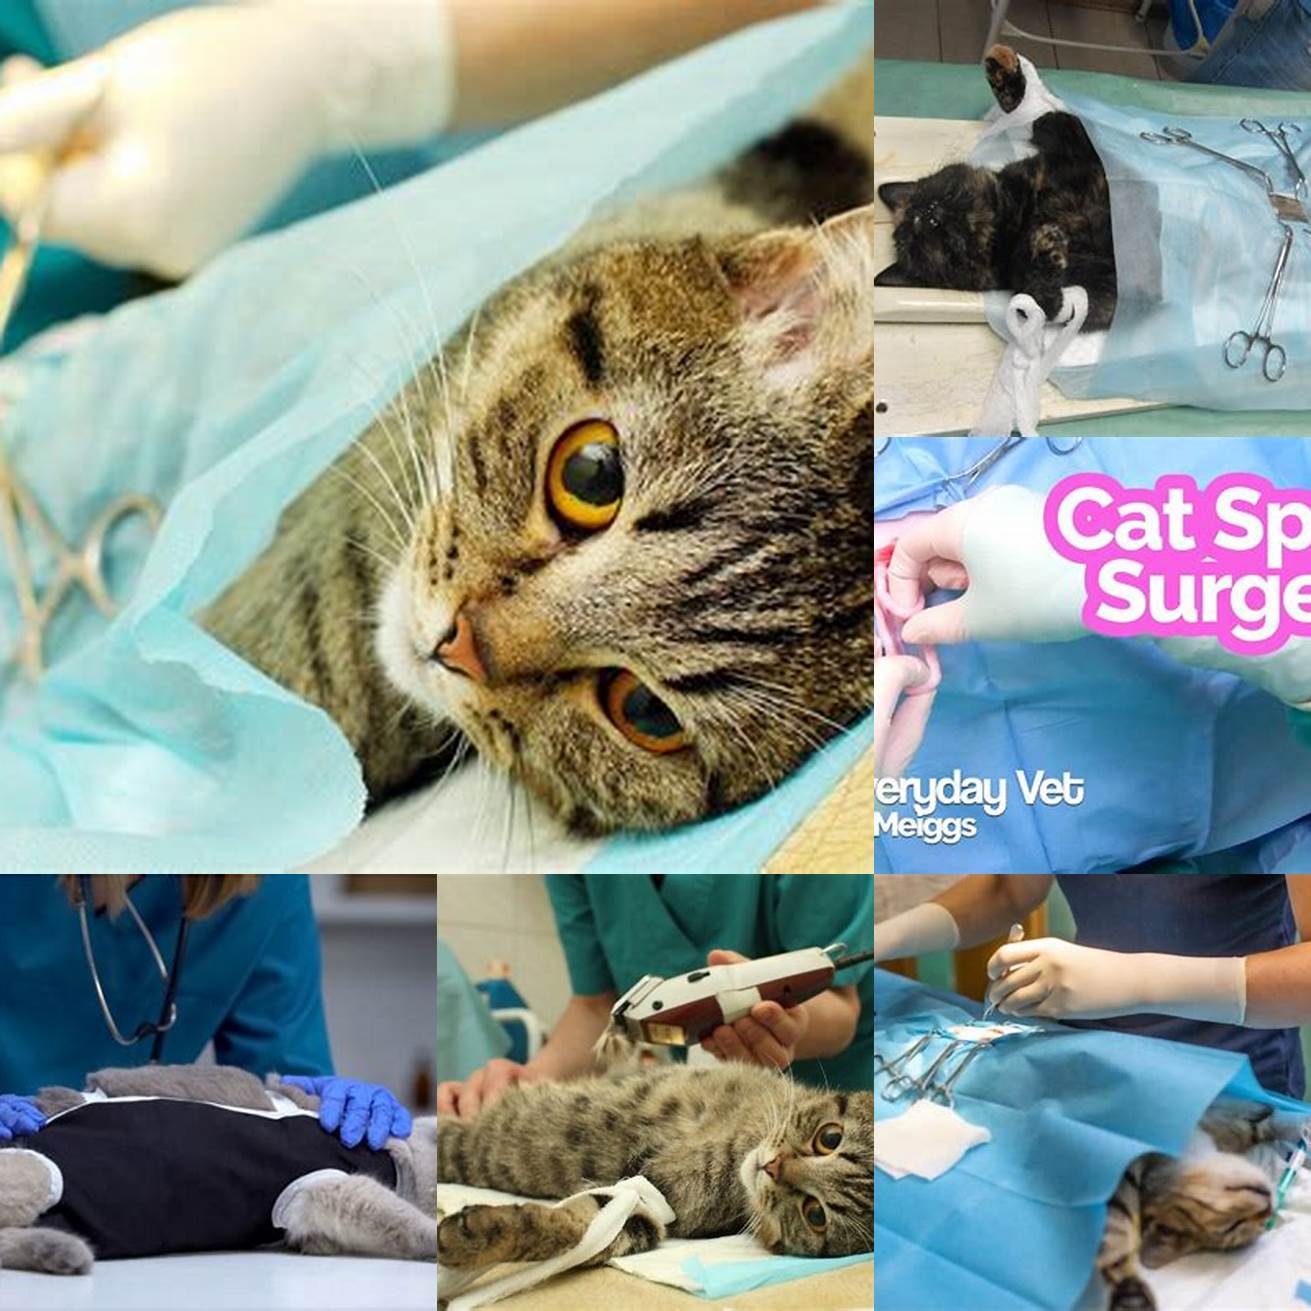 Cat spay surgery